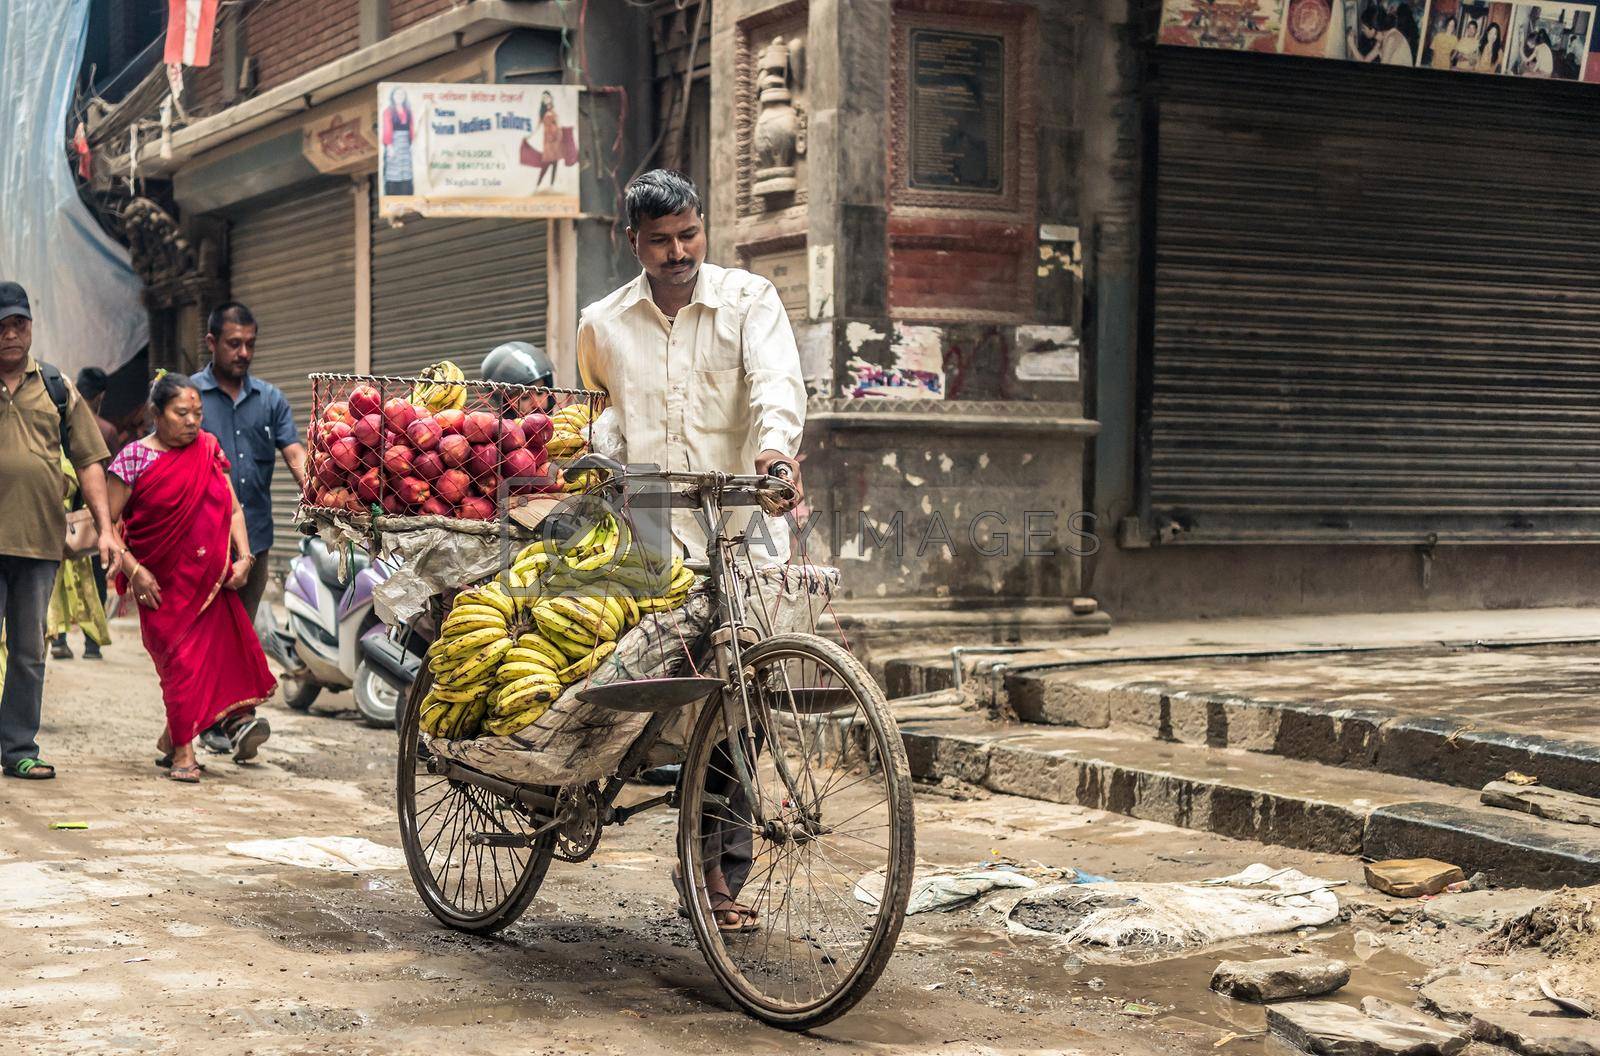 Royalty free image of fruit market in Kathmandu by tan4ikk1